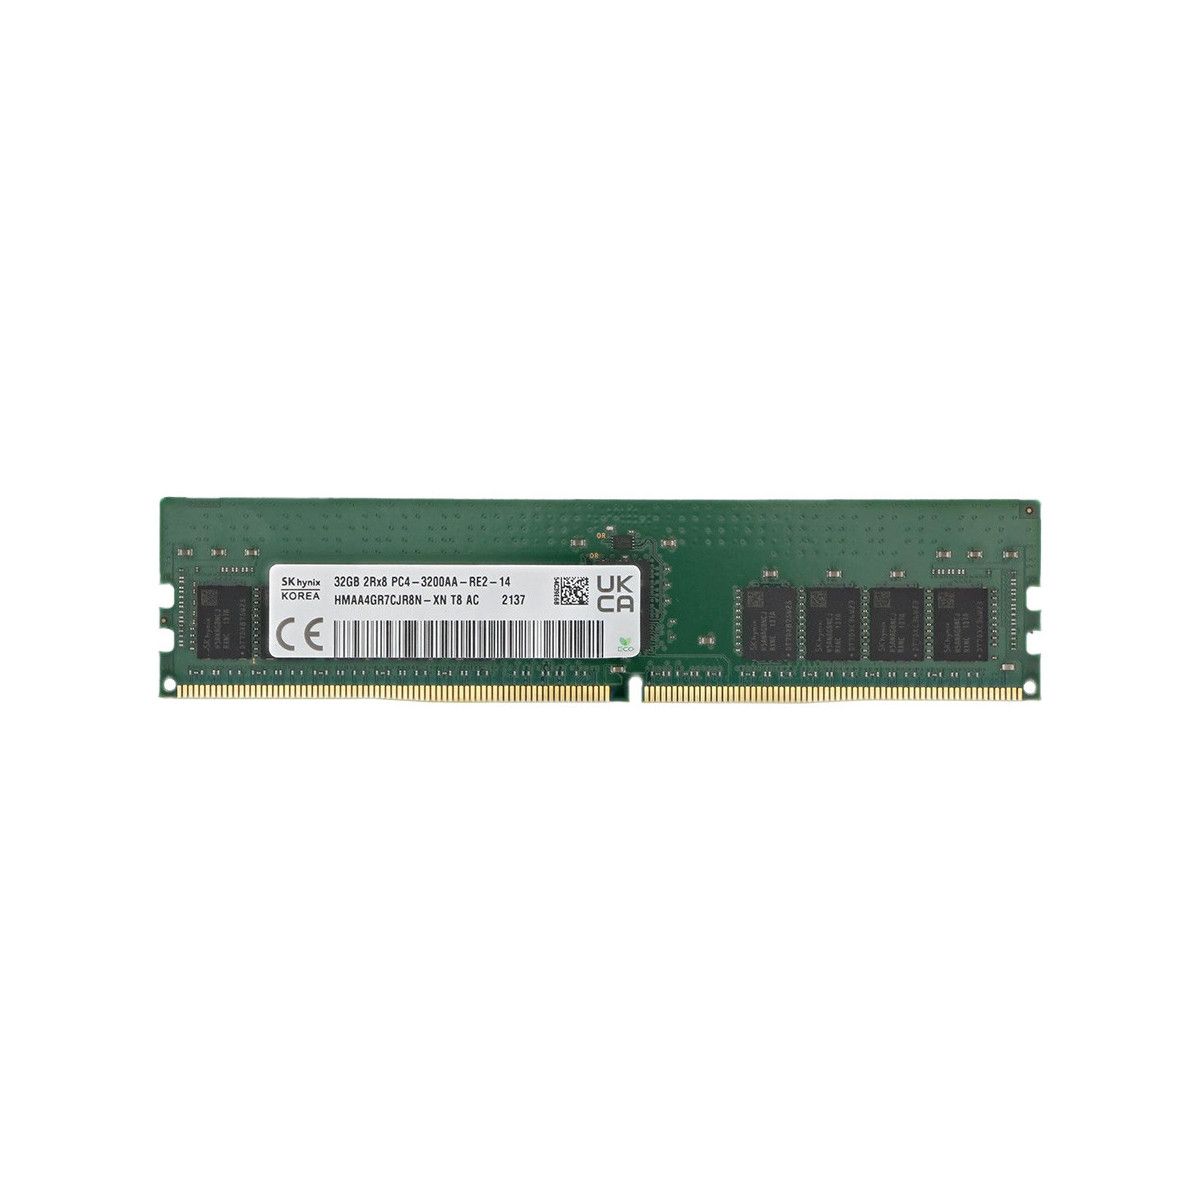 AB614353-MS - Memstar 1x 32GB DDR4-3200 RDIMM PC4-25600R - Mem-Star Kompatybilna pamięć OEM 1 - Memstar 